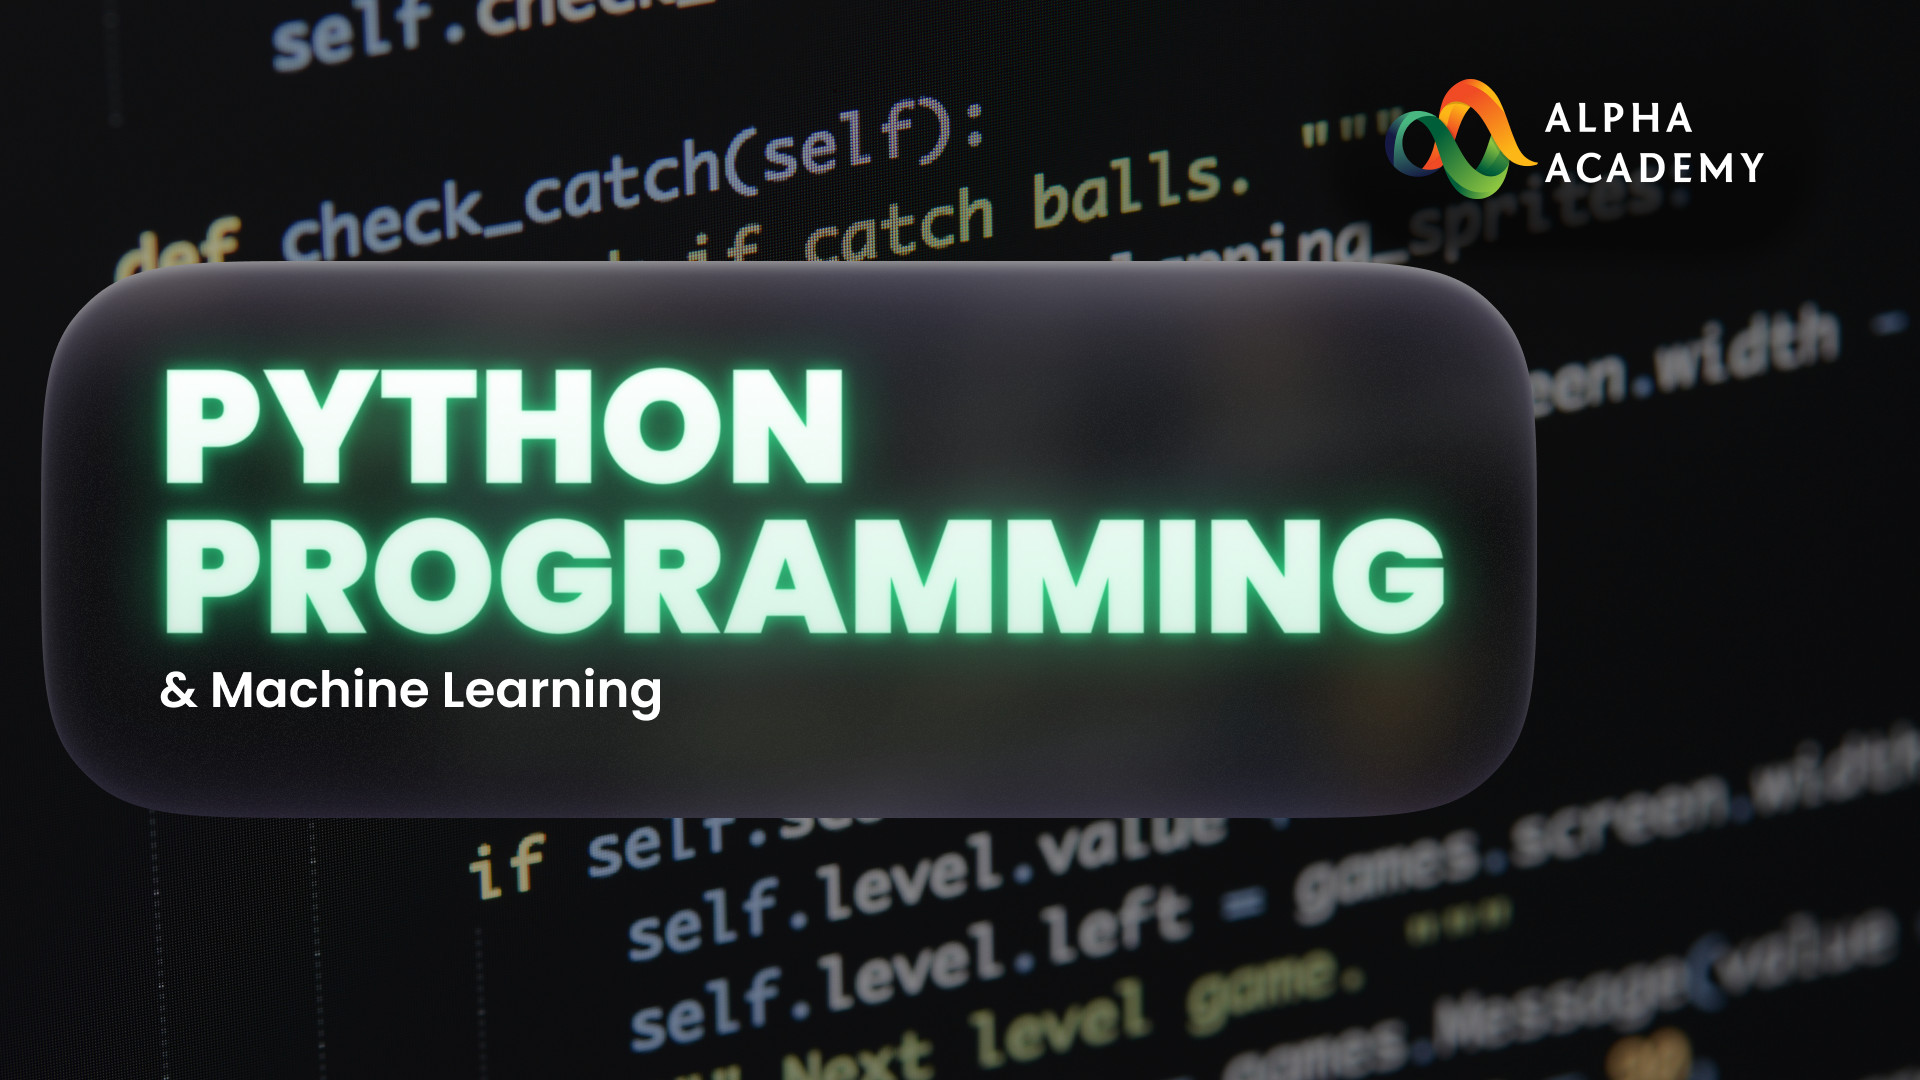 Python Programming & Machine Learning Alpha Academy Code, $18.07